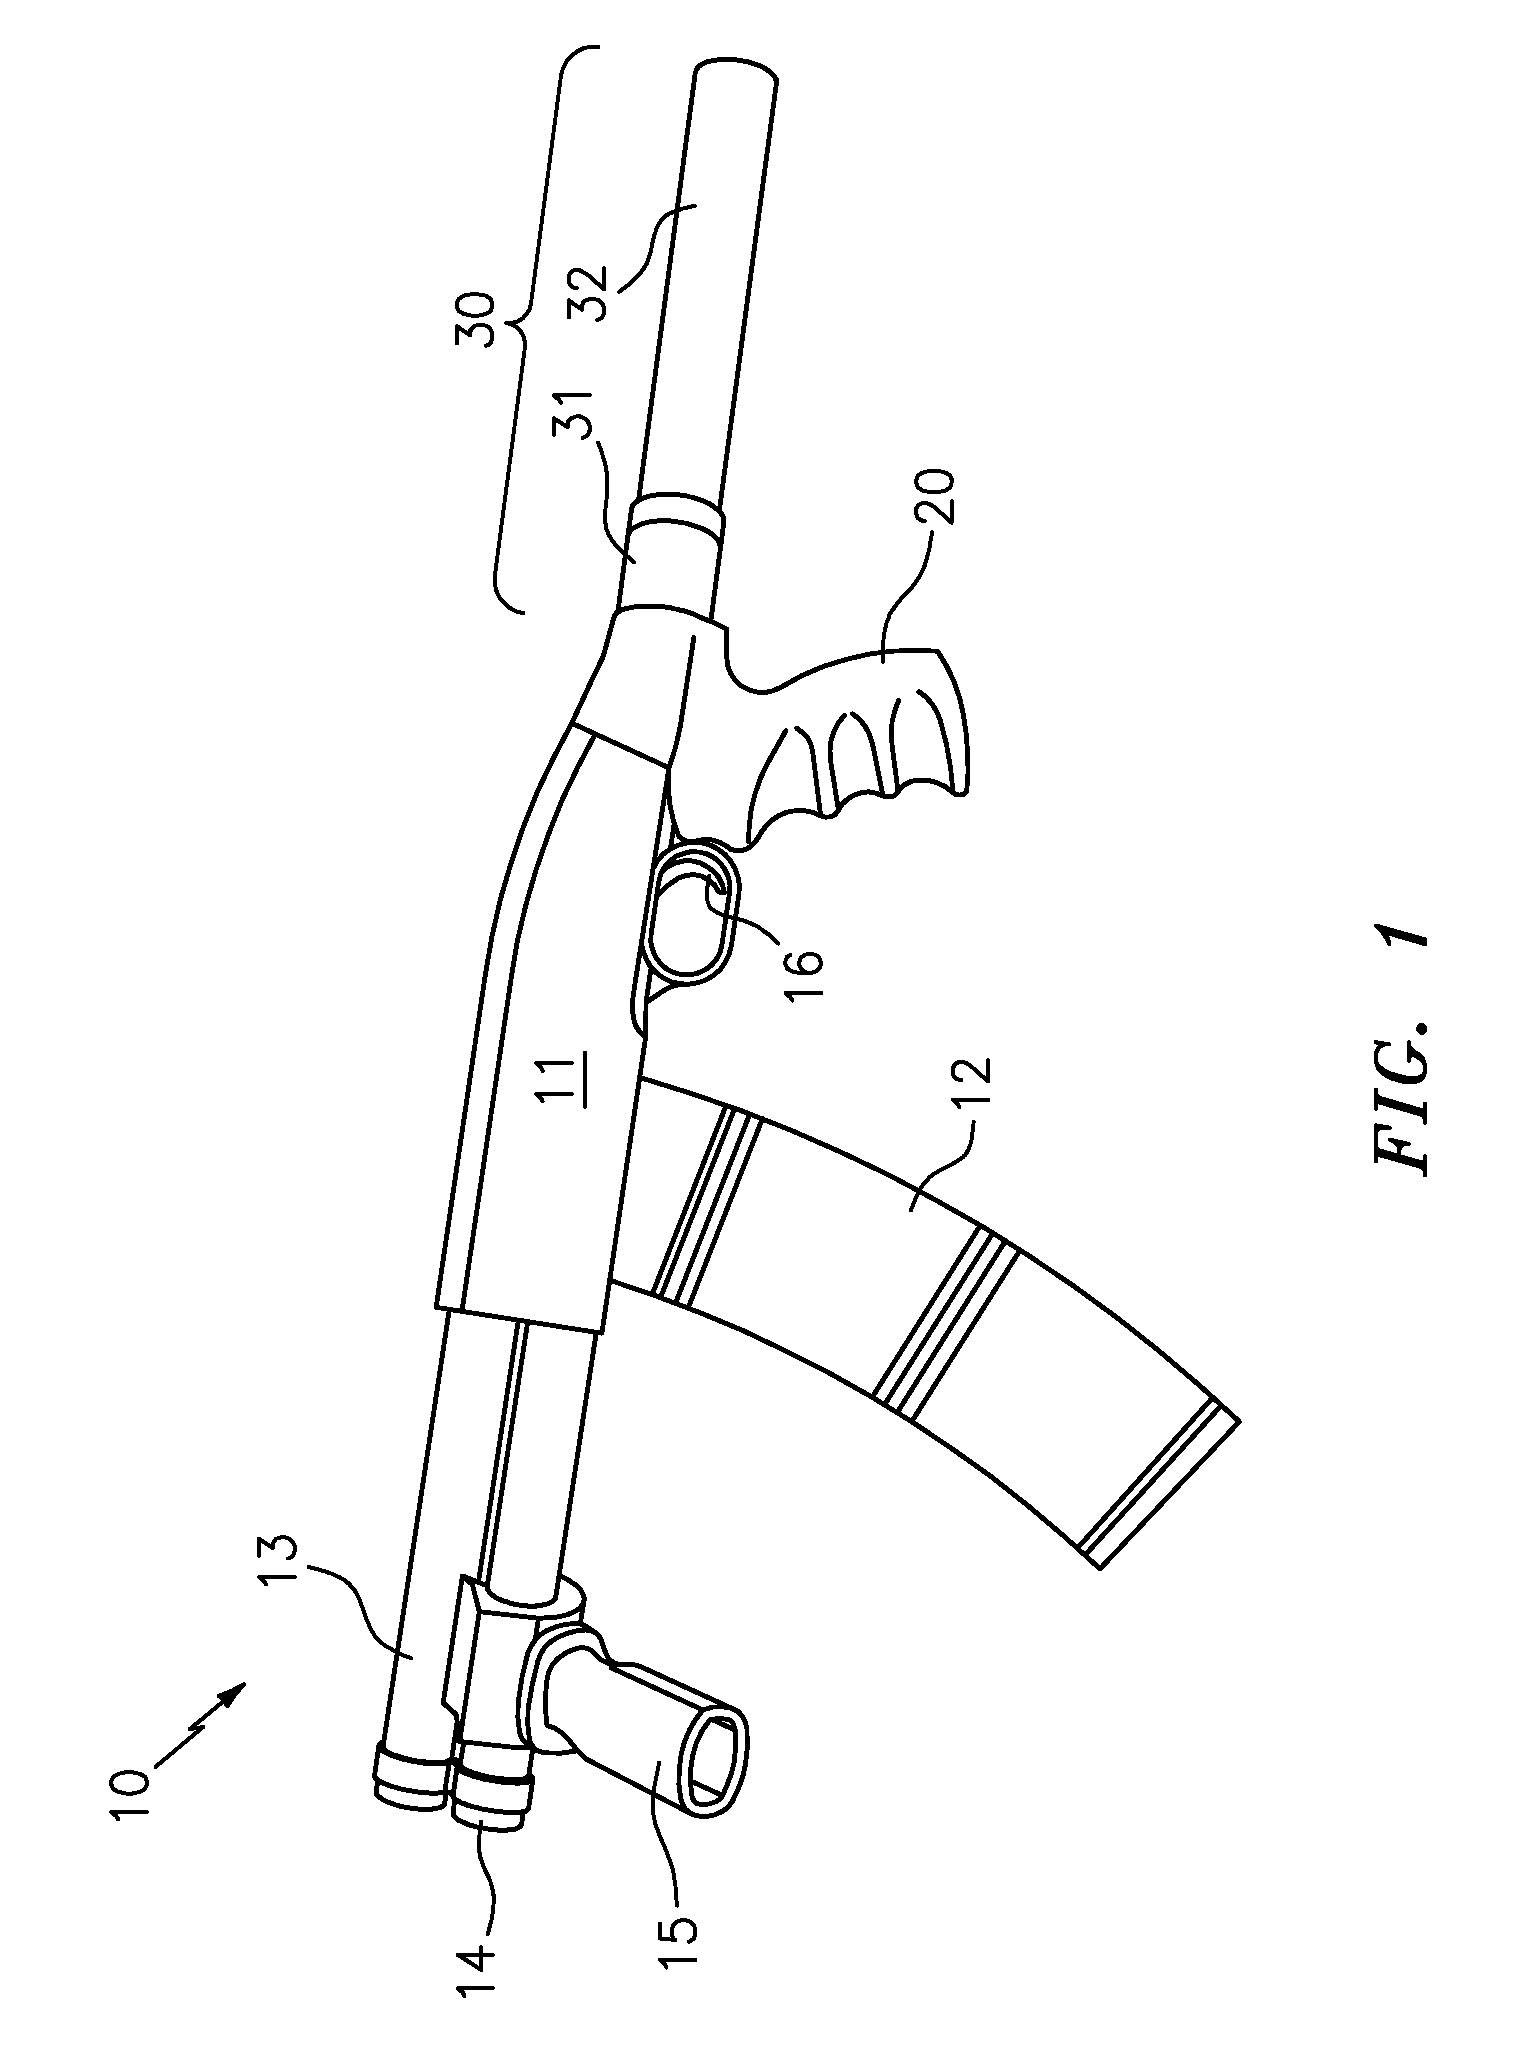 Firearm with shotgun receiver and stabilizing brace adaptor